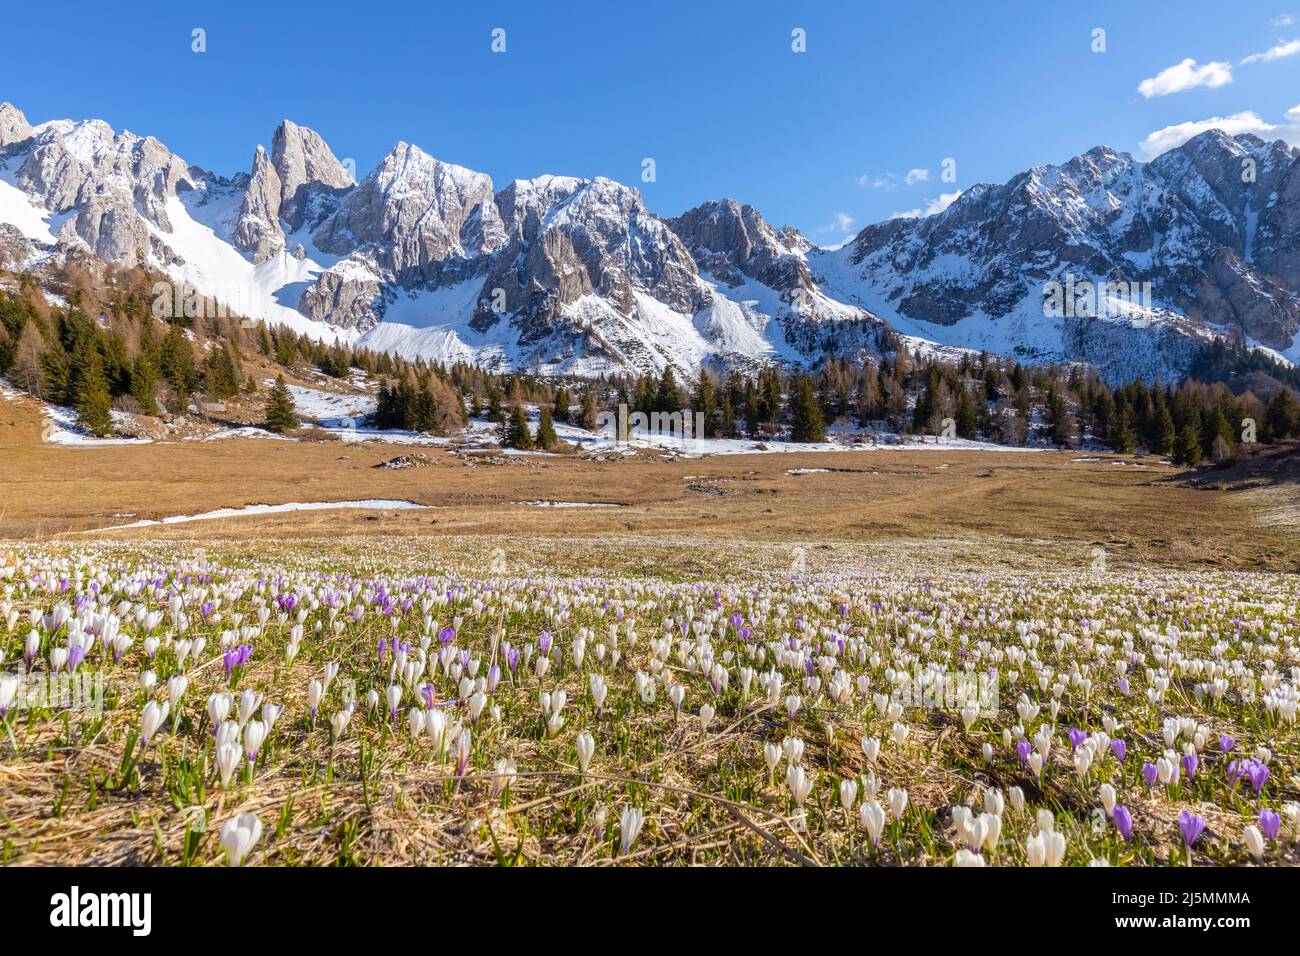 Blick auf die Frühlingsblüte der Krokusse in Campelli di Schilpario. Schilpario, Val di Scalve, Bezirk Bergamo, Lombardei, Italien, Südeuropa. Stockfoto